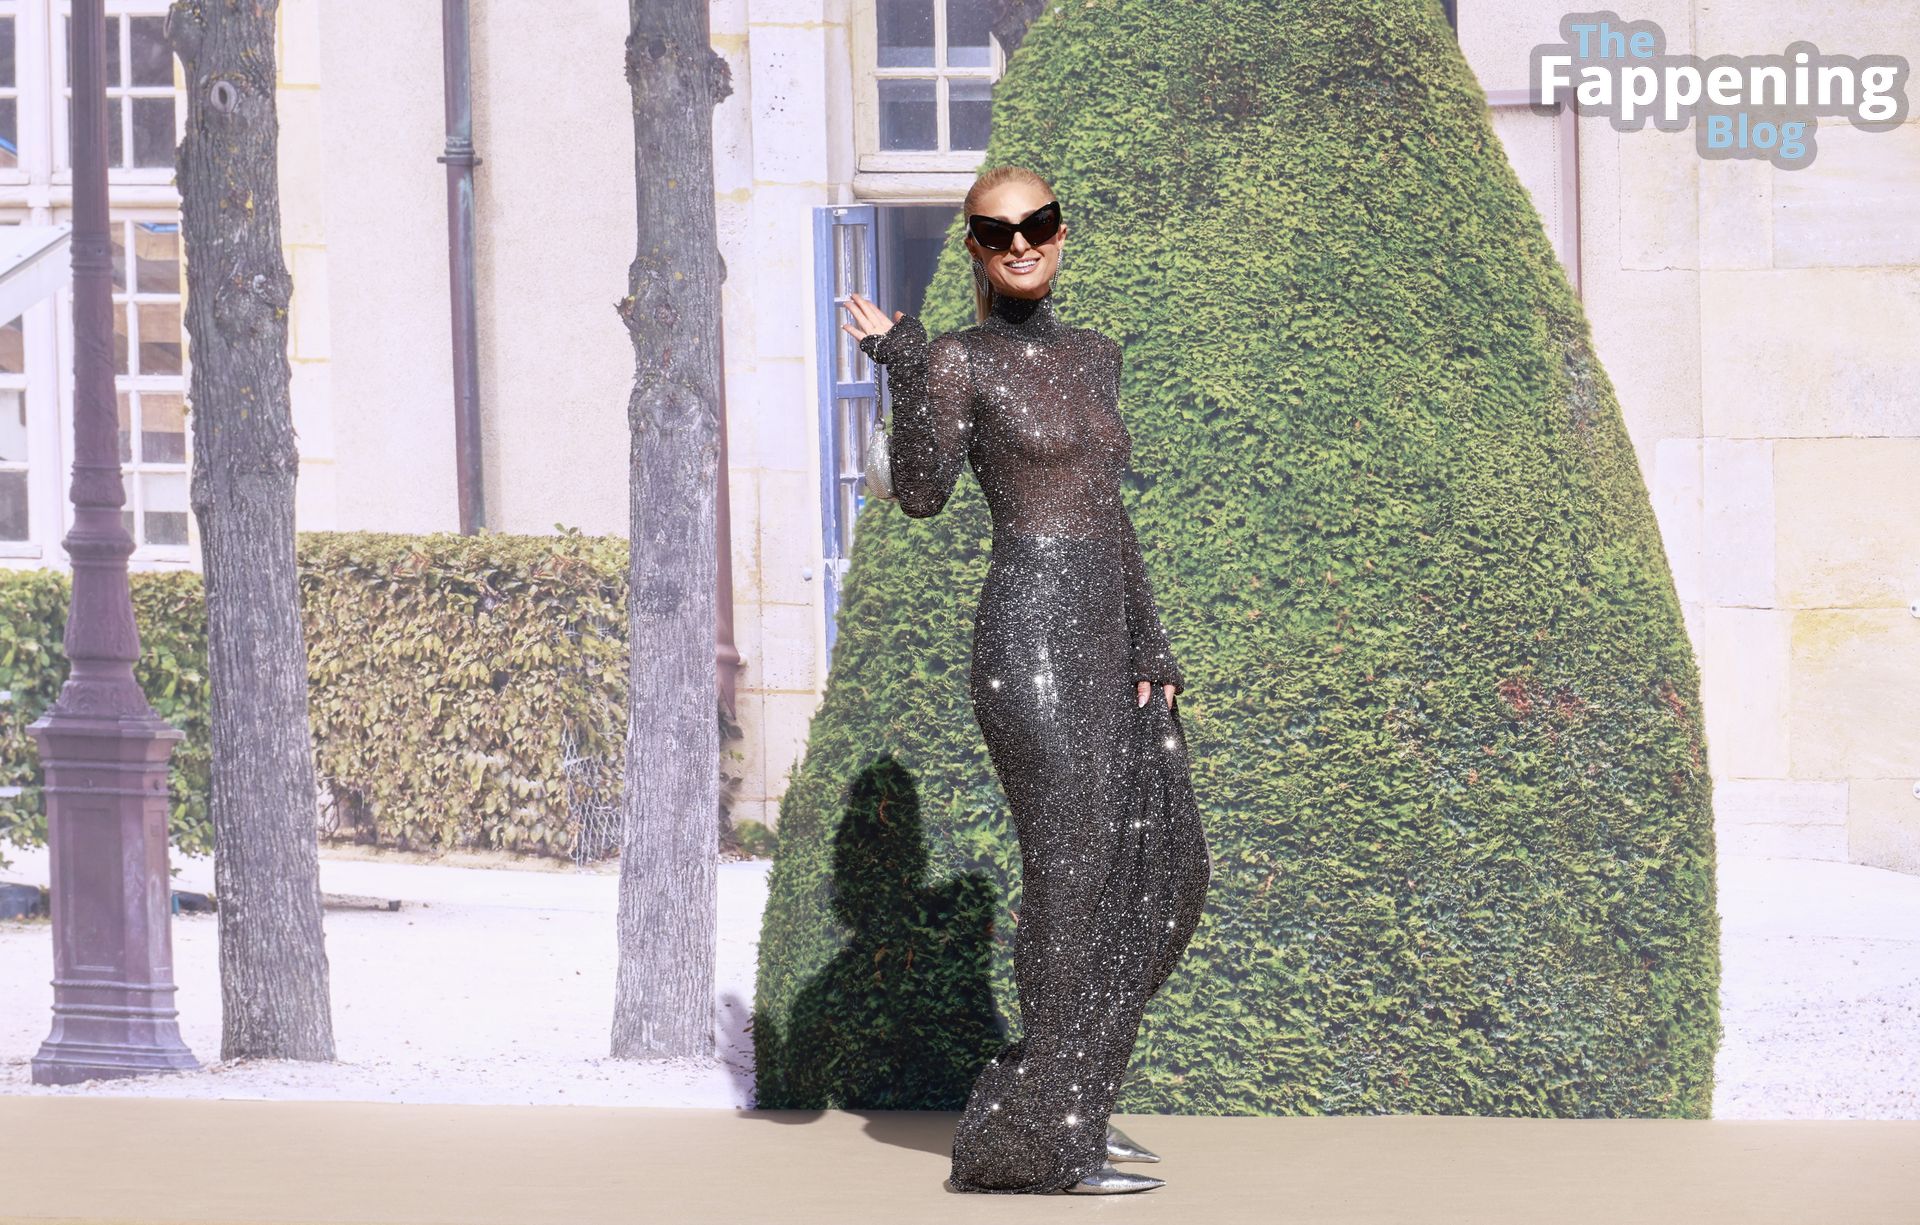 Paris-Hilton-Sexy-1-The-Fappening-Blog-1.jpg